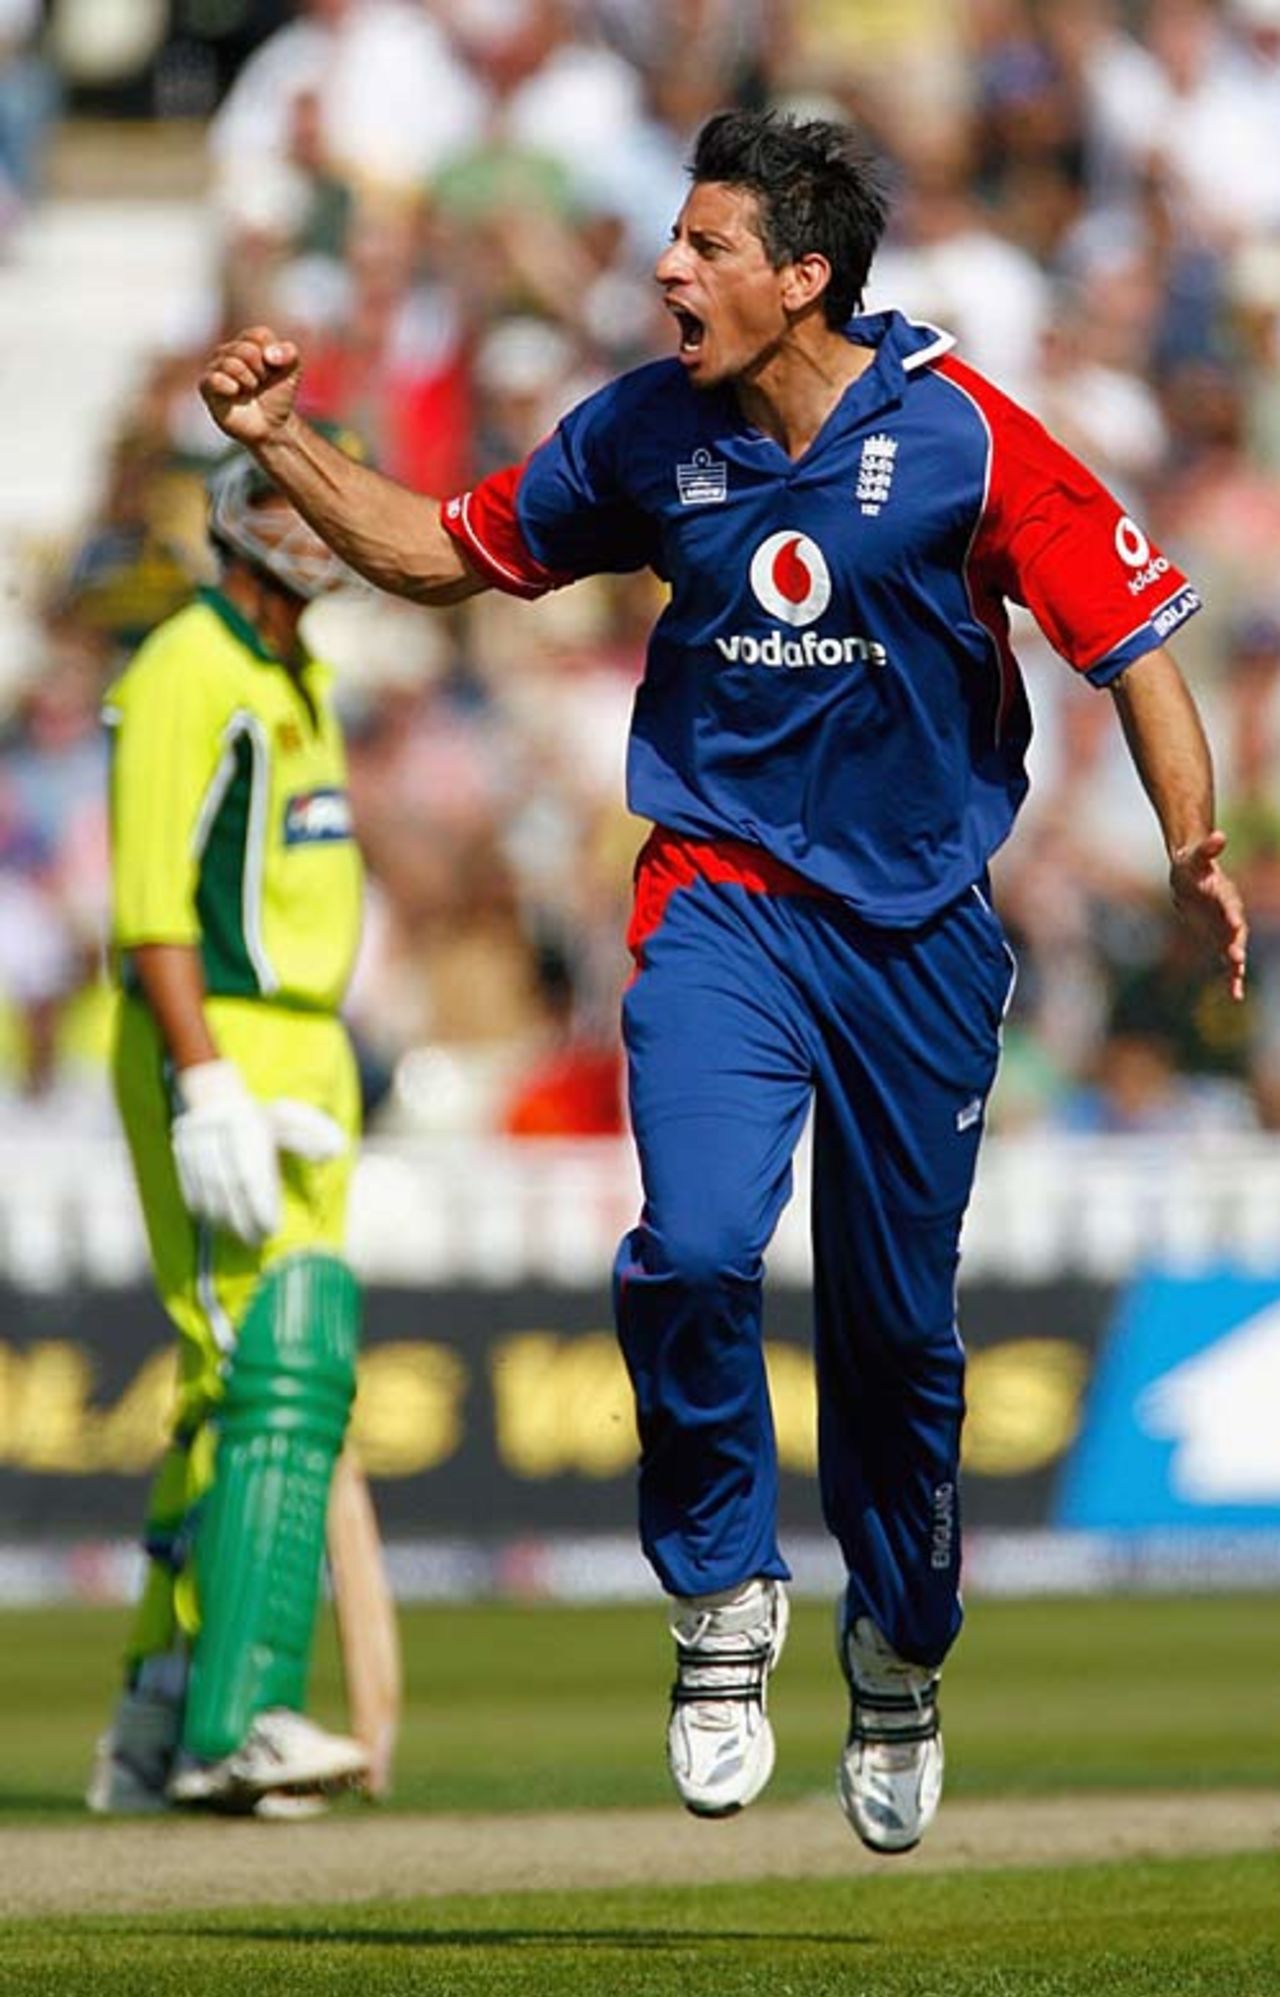 Sajid Mahmood roars his delight at picking up his first wicket, England v Pakistan, 5th ODI, Edgbaston, September 10, 2006